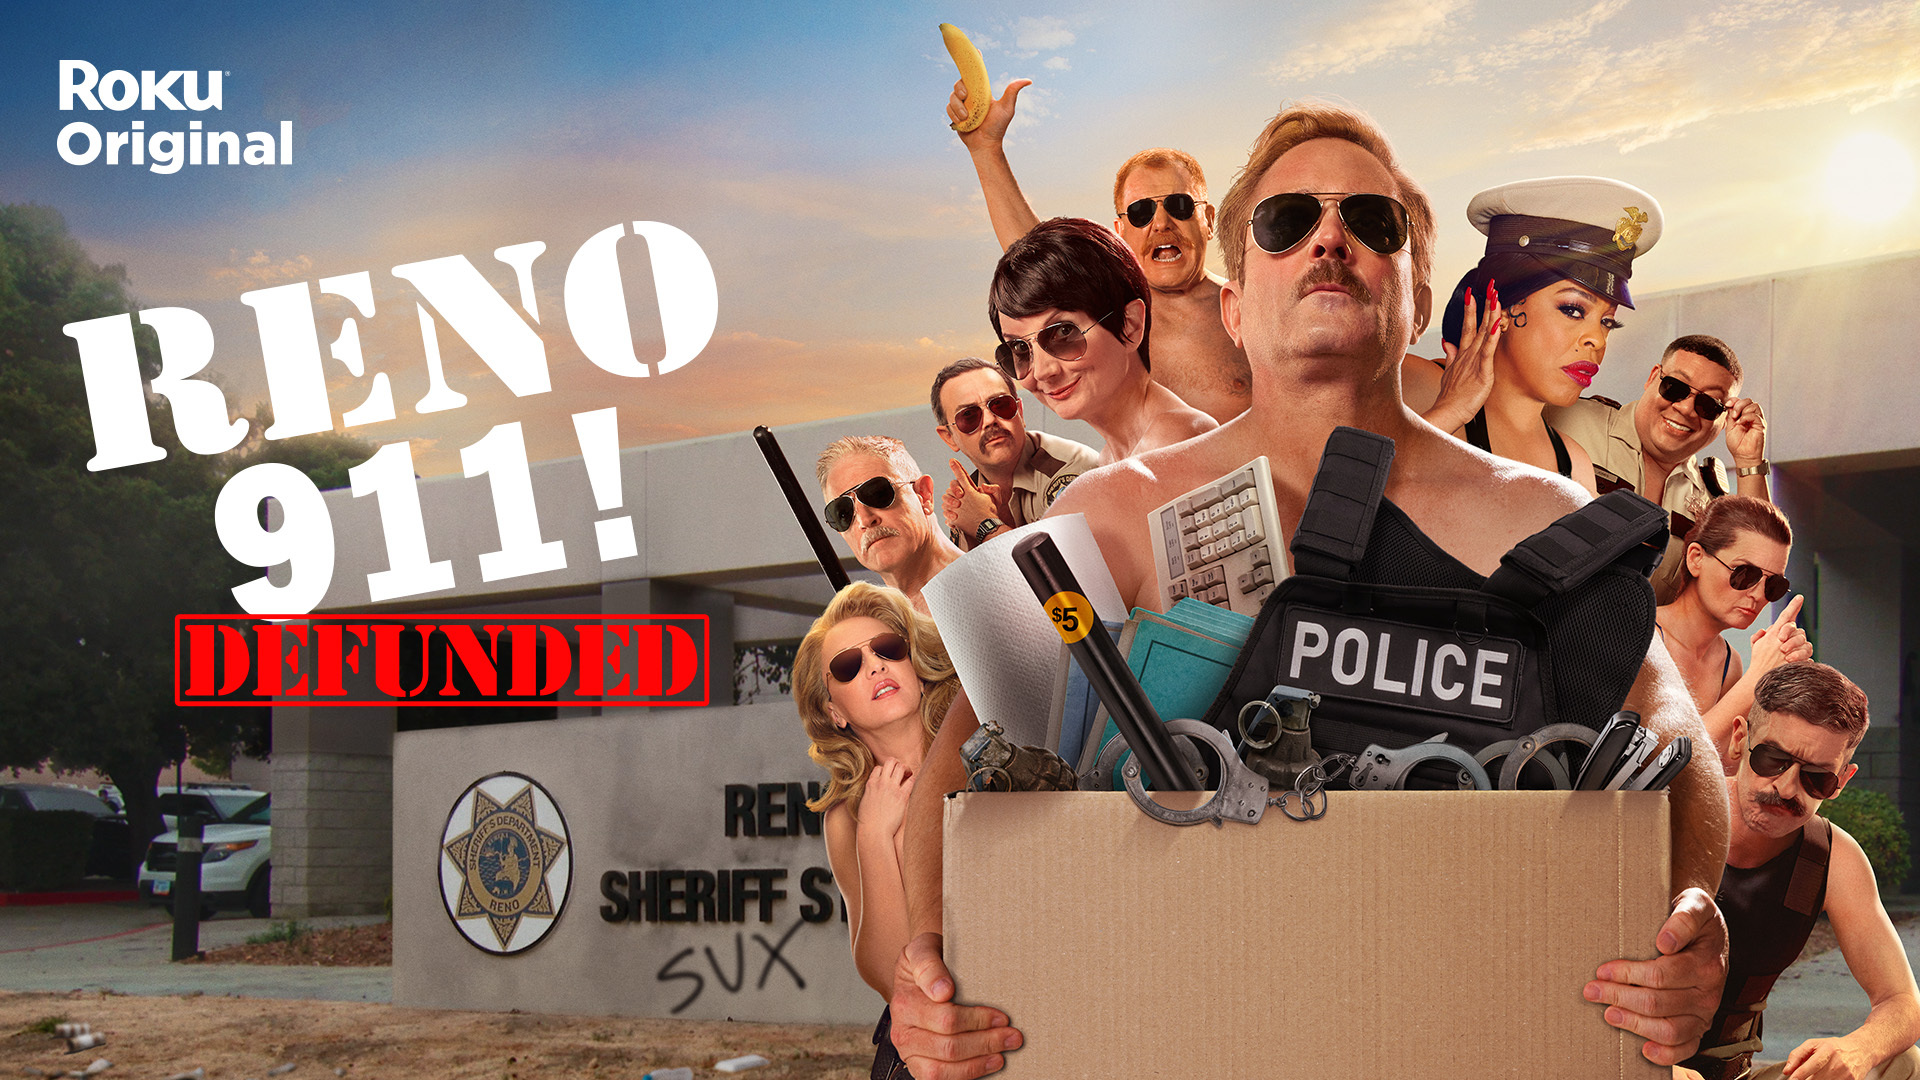 Watch Reno 911! Season 5